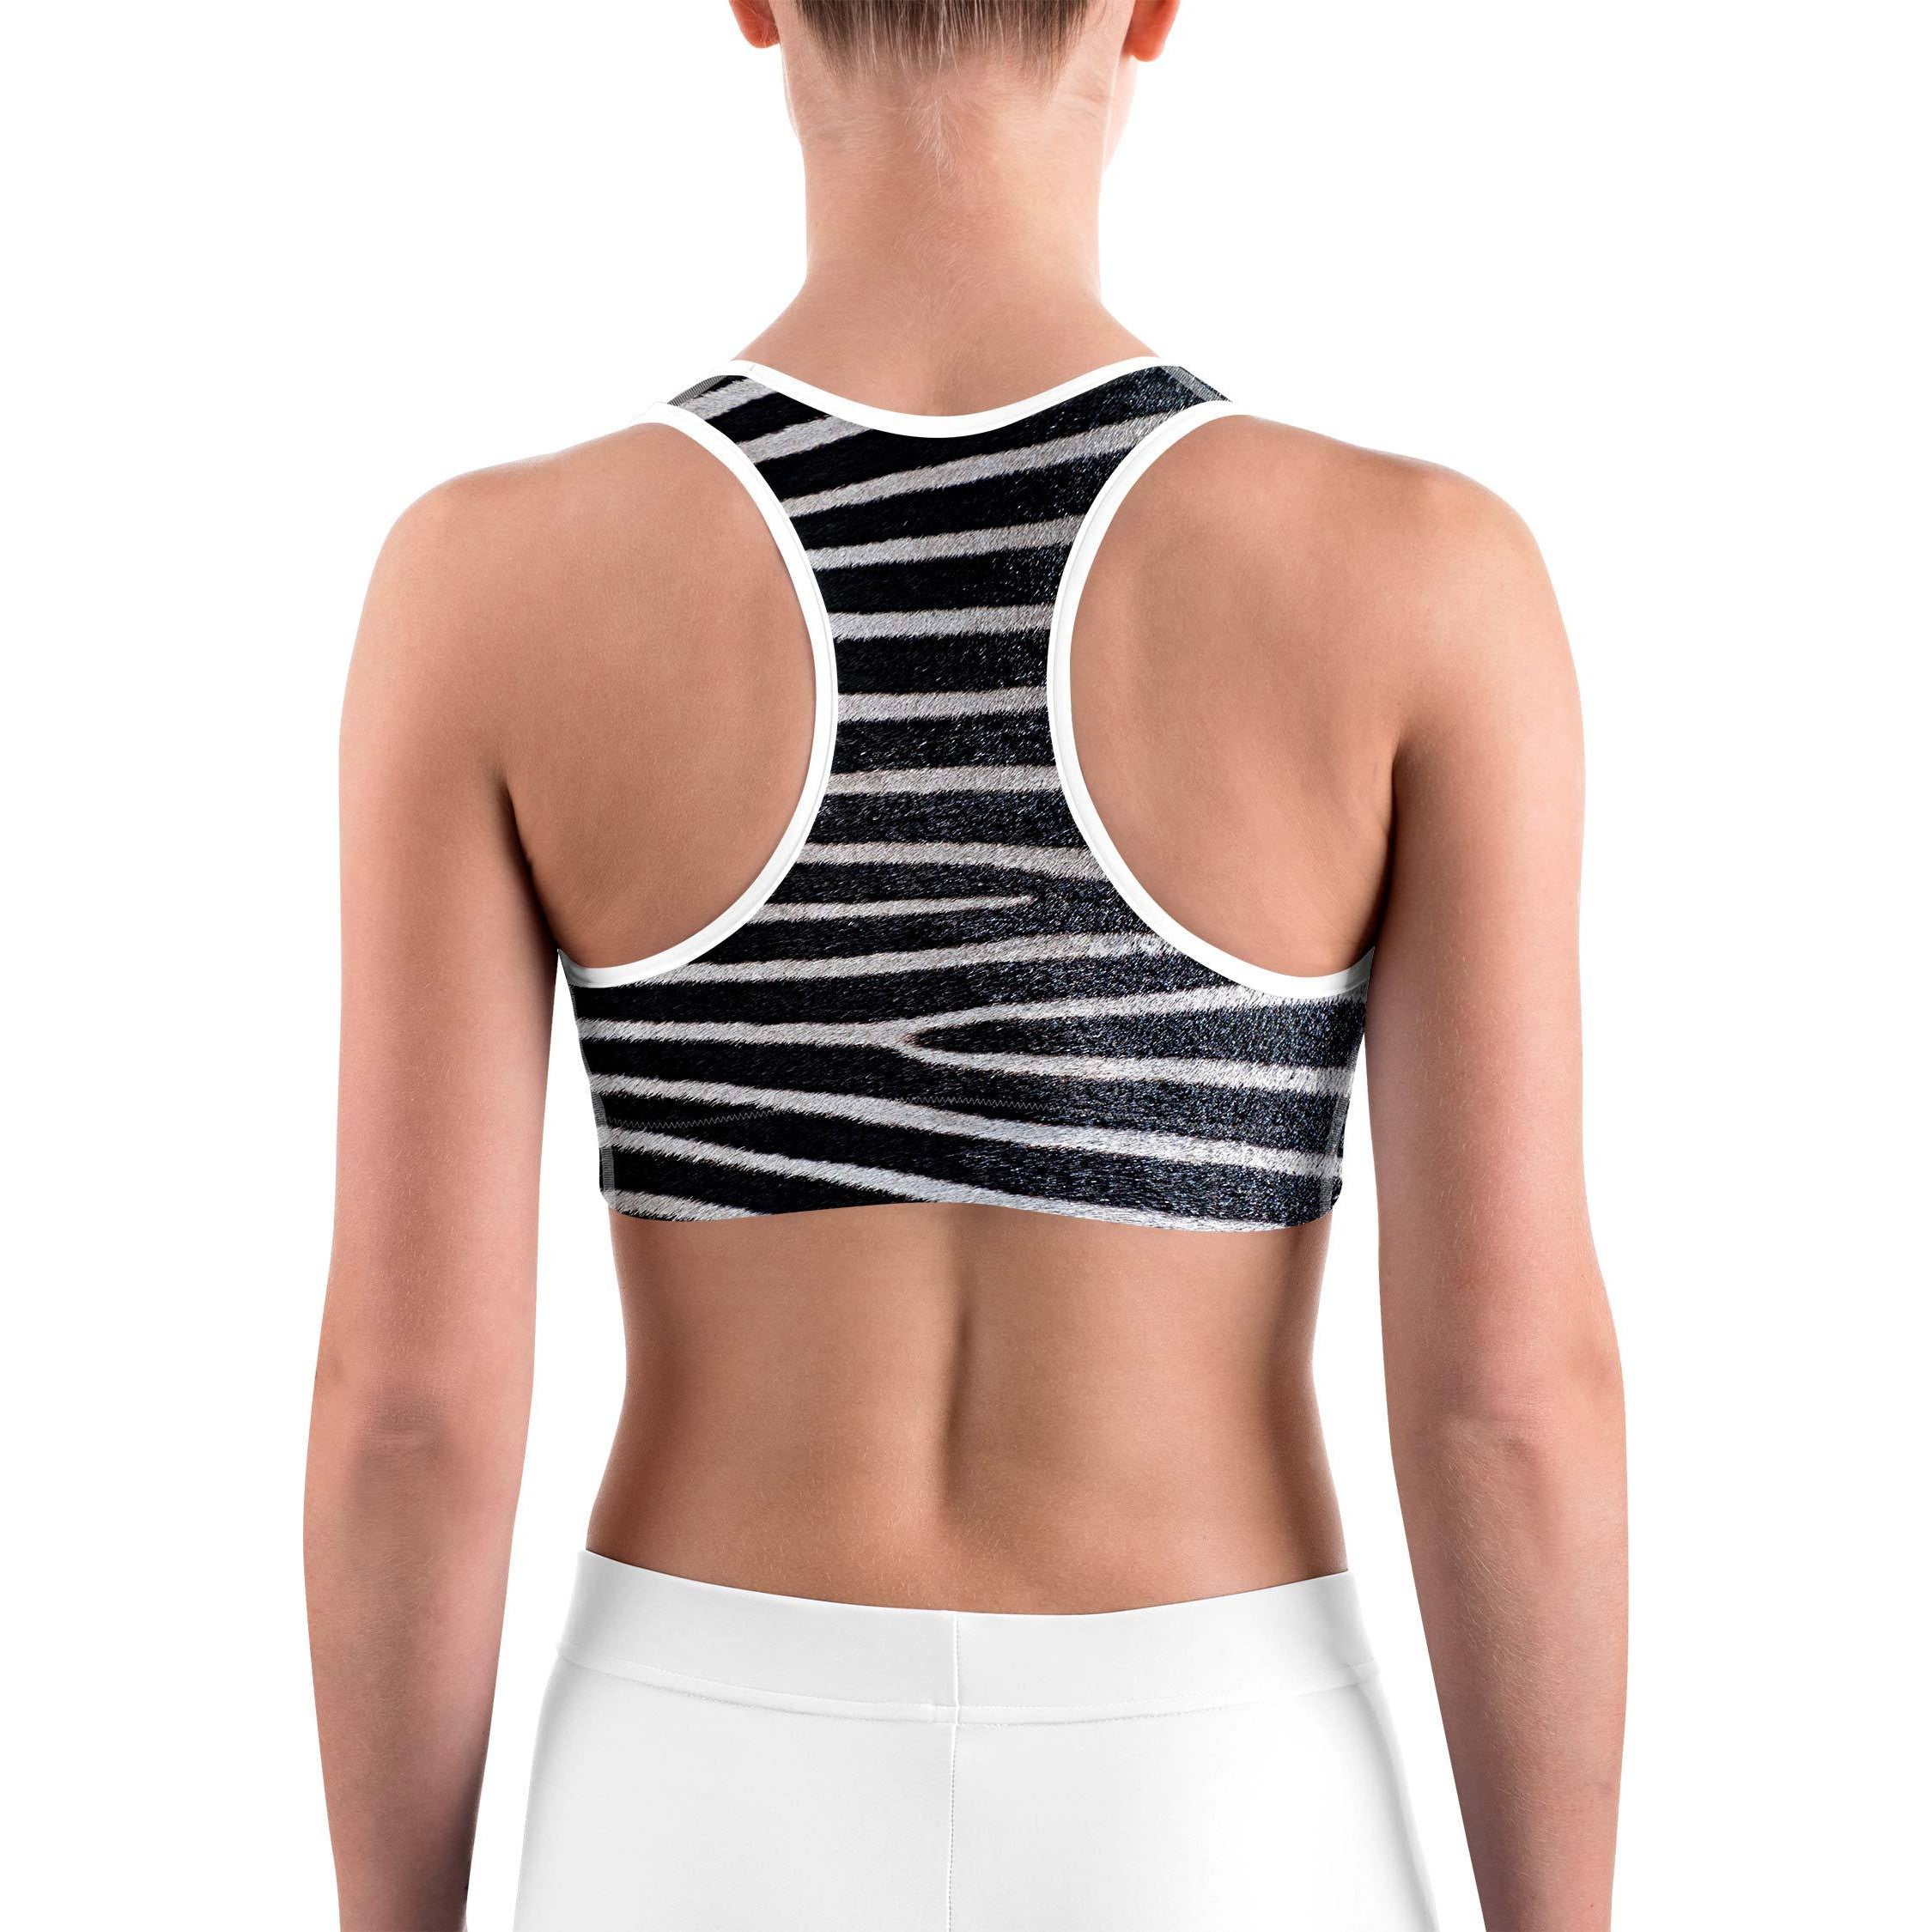 Zebra Skin Sports bra